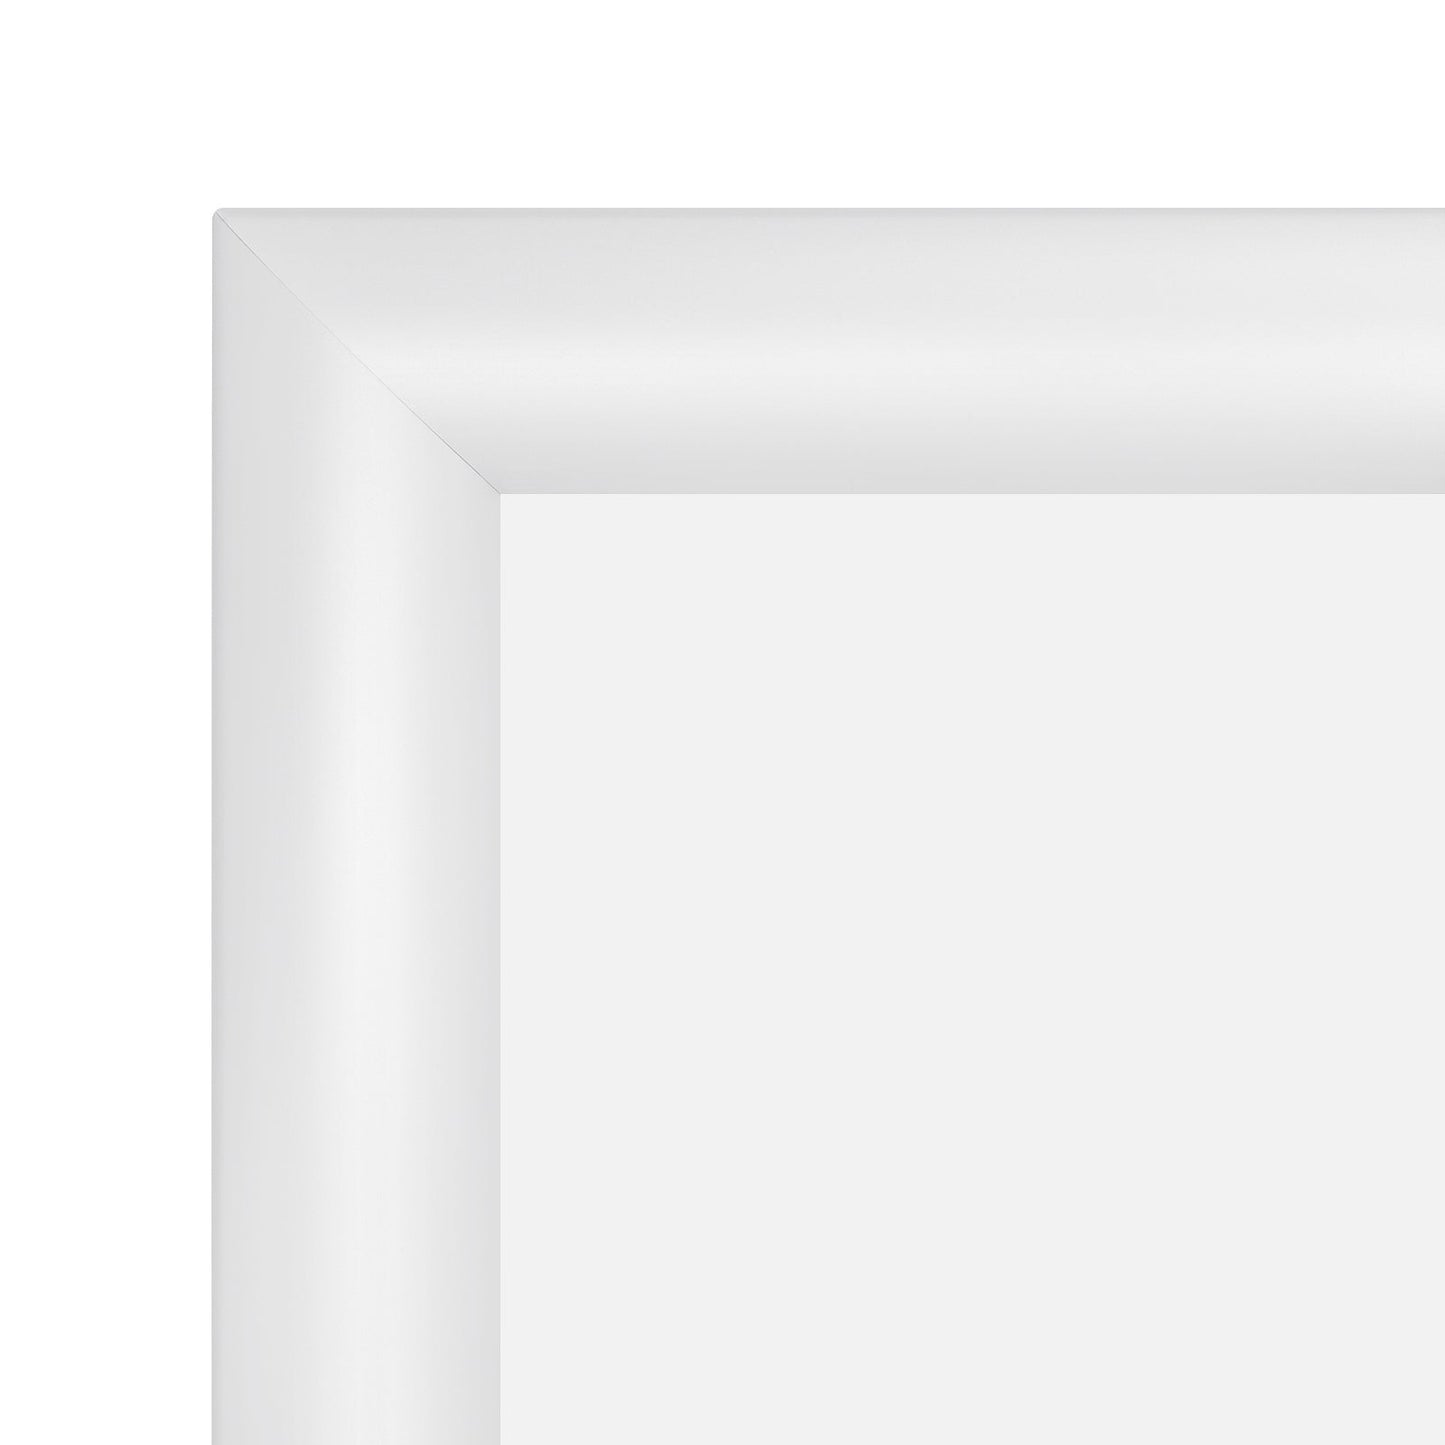 12x20 White SnapeZo® Snap Frame - 1.2" Profile - Snap Frames Direct